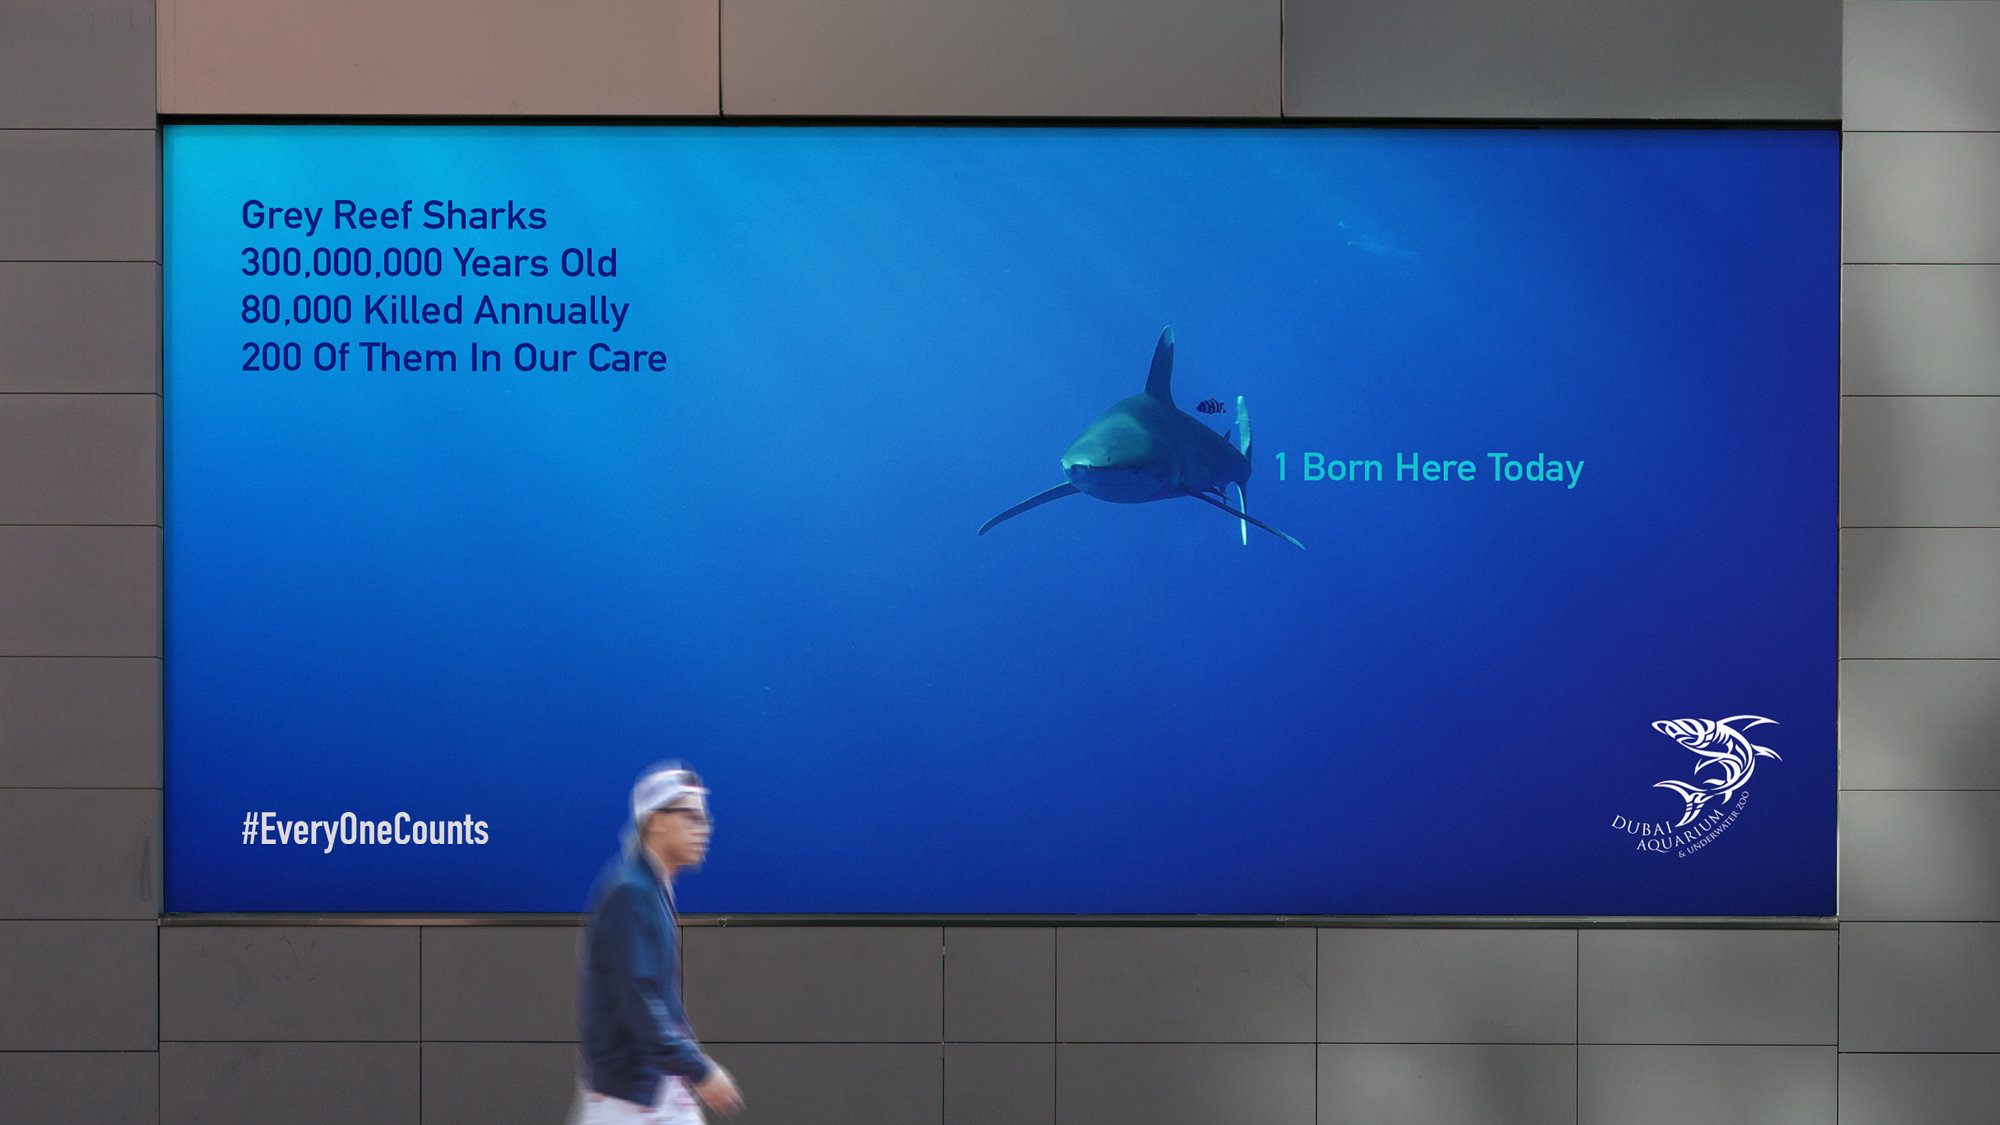 Entity-3-Three-Brand-Design-Agency-Sydney-Campaigns-15-Dubai-Aquarium-digital-poster-ooh-ad